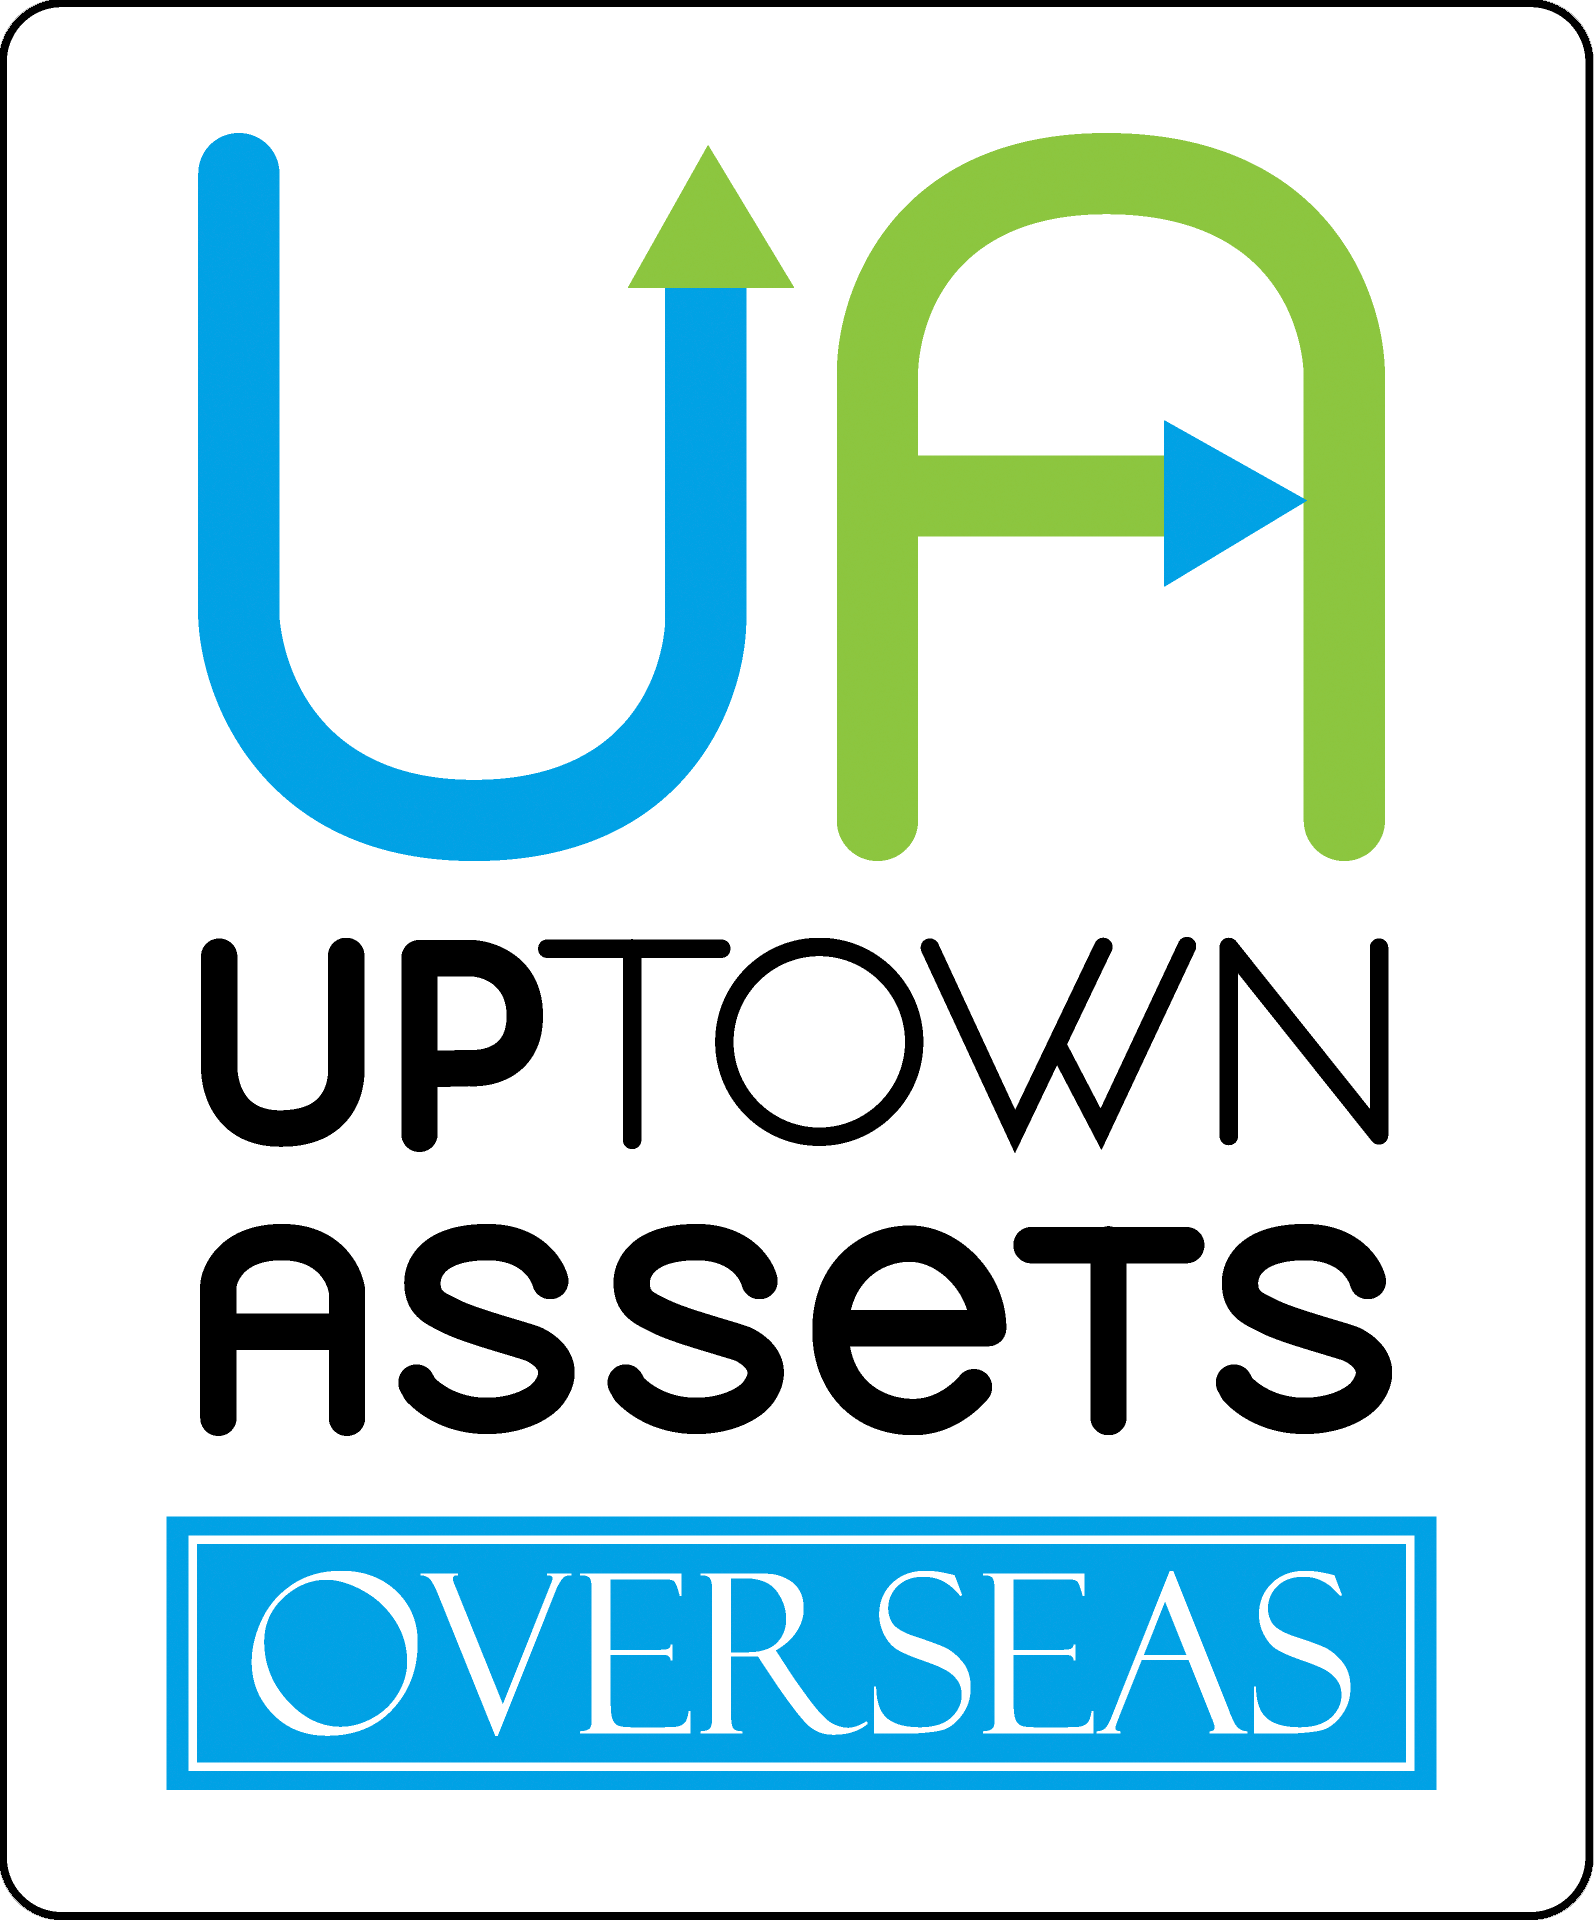 Uptown Assets Overseas